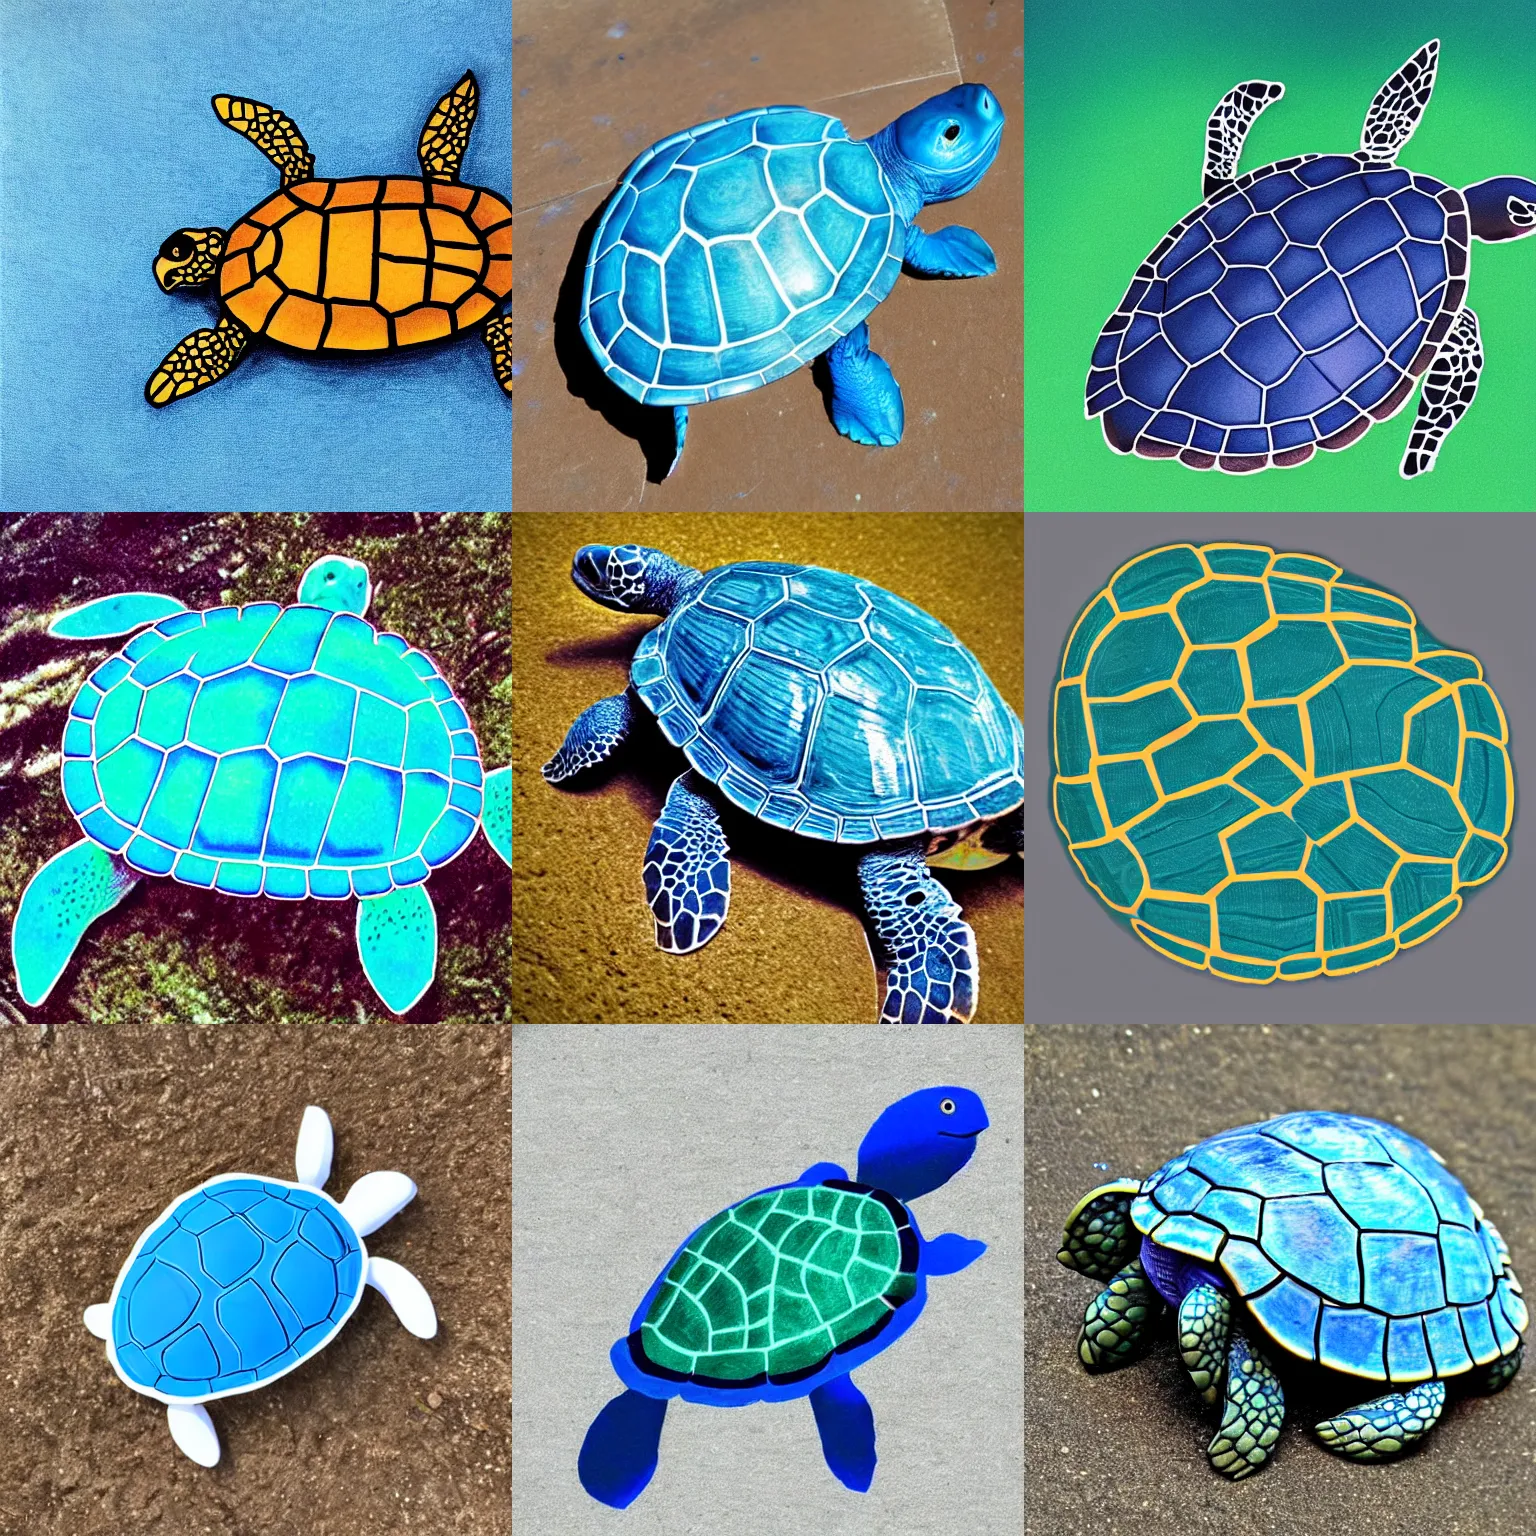 Prompt: <turtle shell=blue>turtle</turtle>